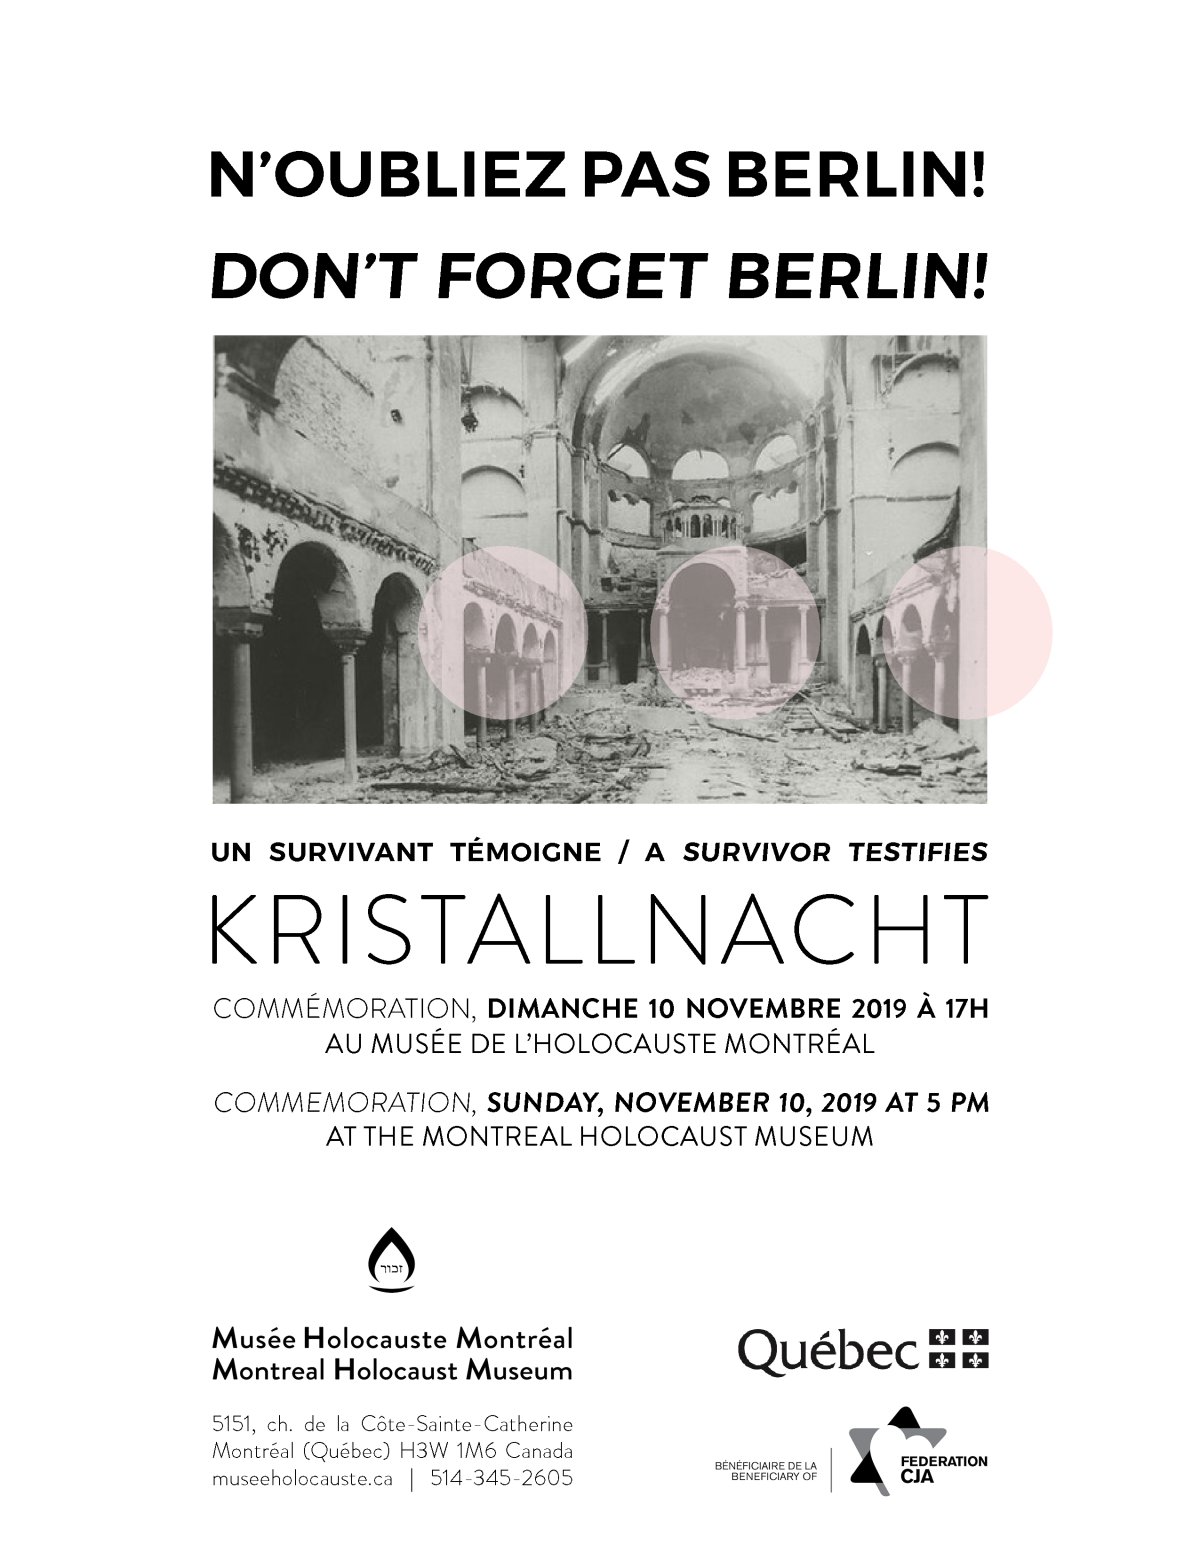 Commemoration of Kristallnacht Pogrom - image